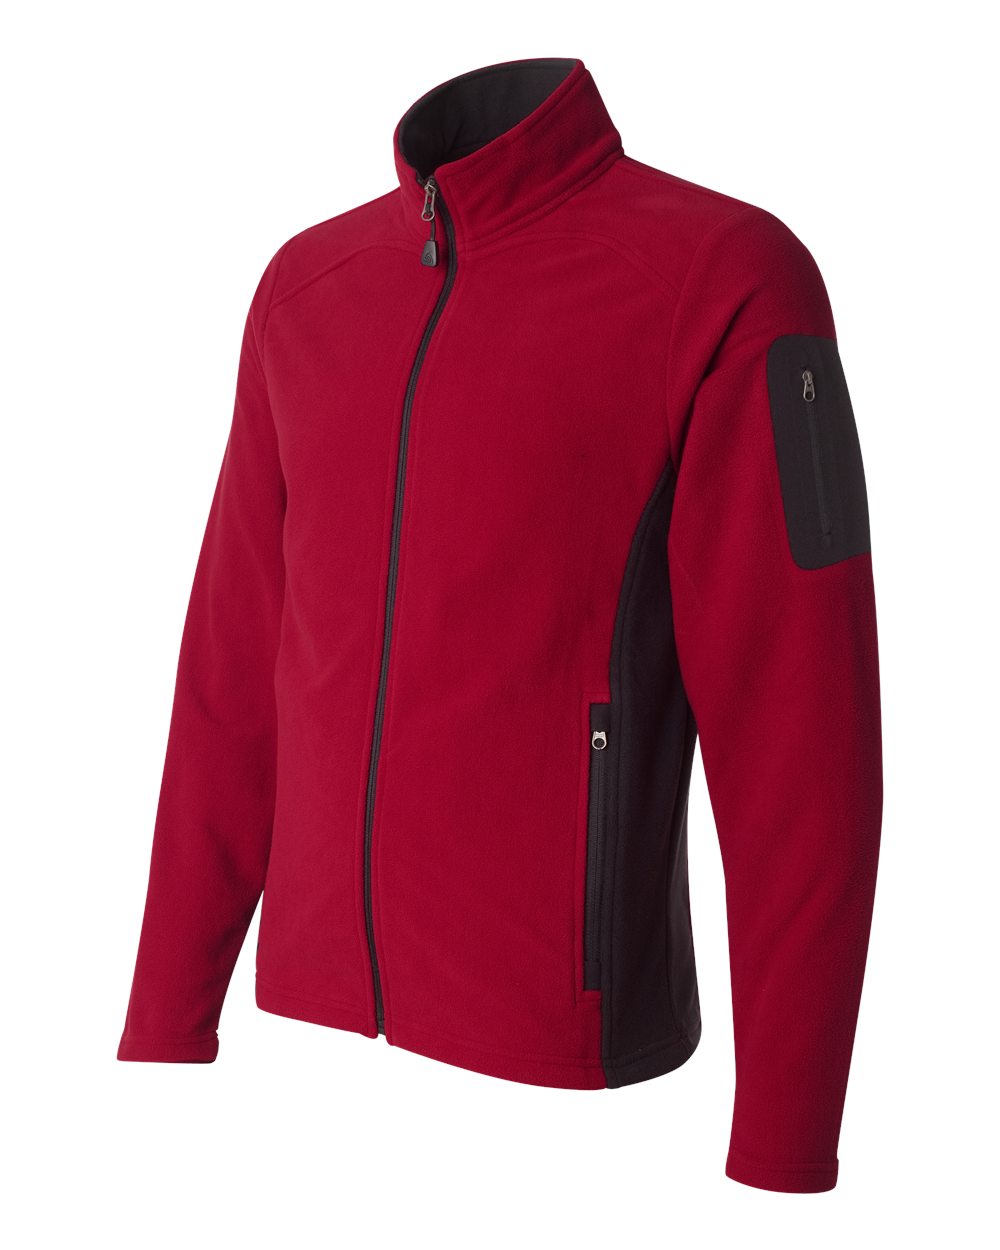 Colorado Clothing 5295 - Colorblocked Full-Zip Microfleece Jacket